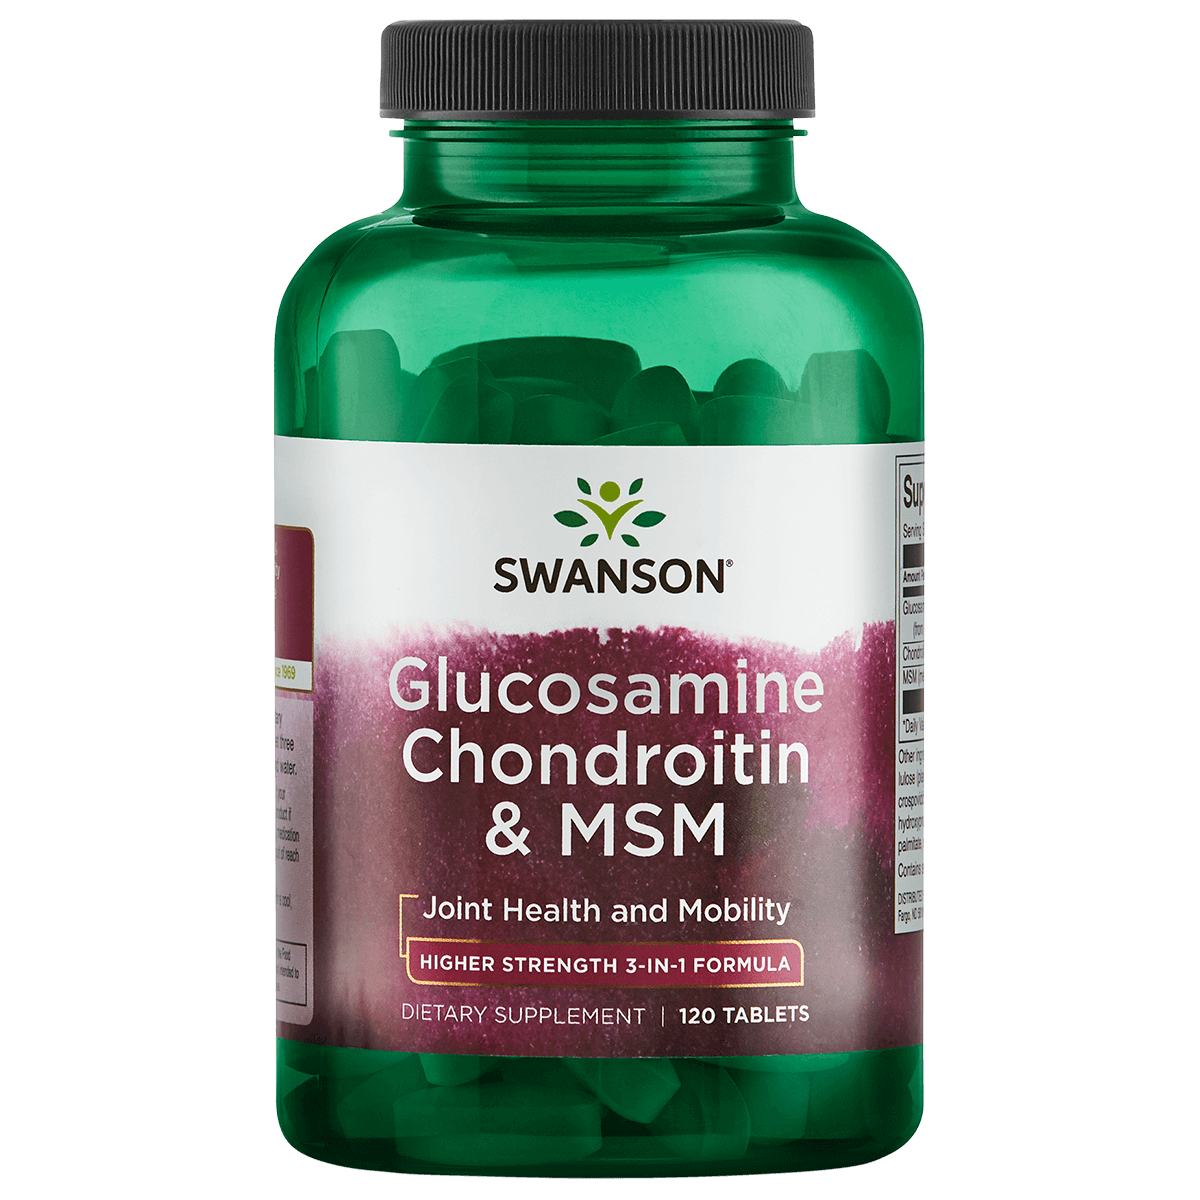 Glucosamin chondroiti & Msm